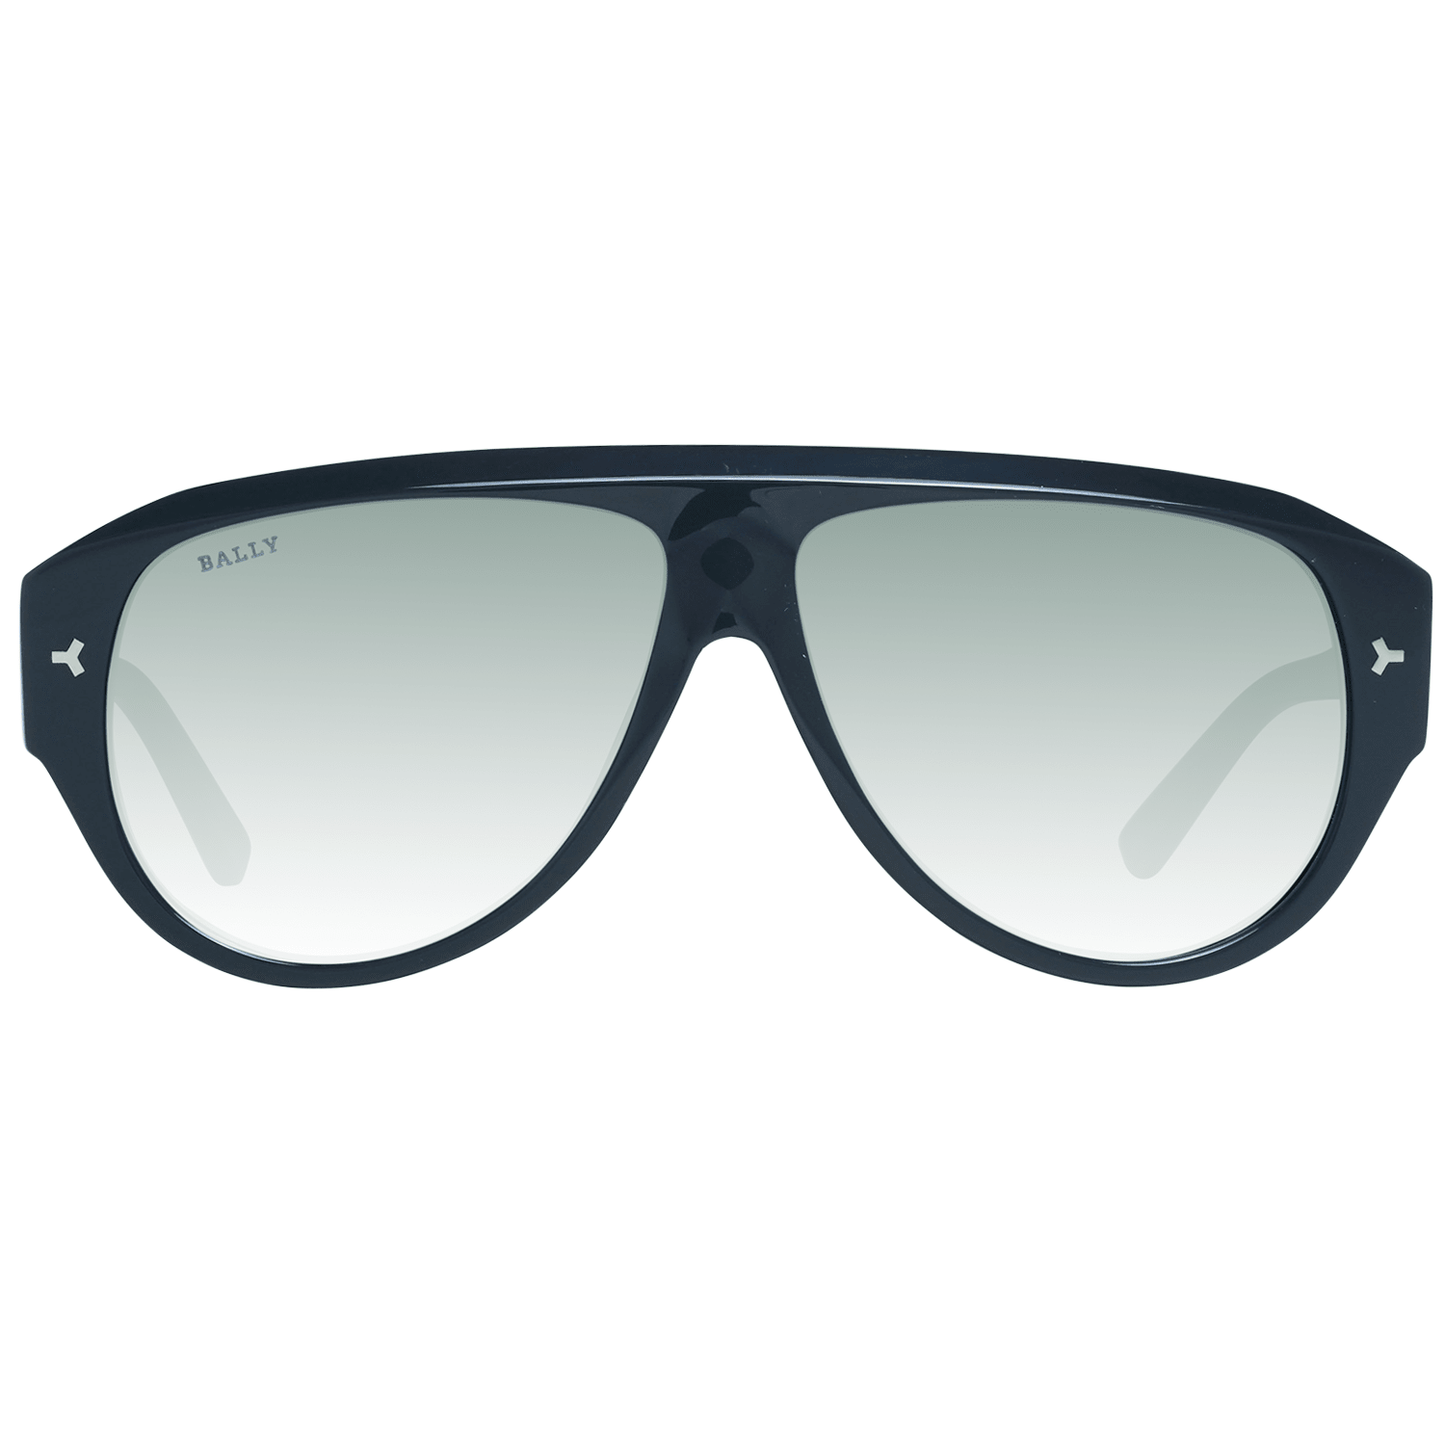 Grey Unisex Sunglasses